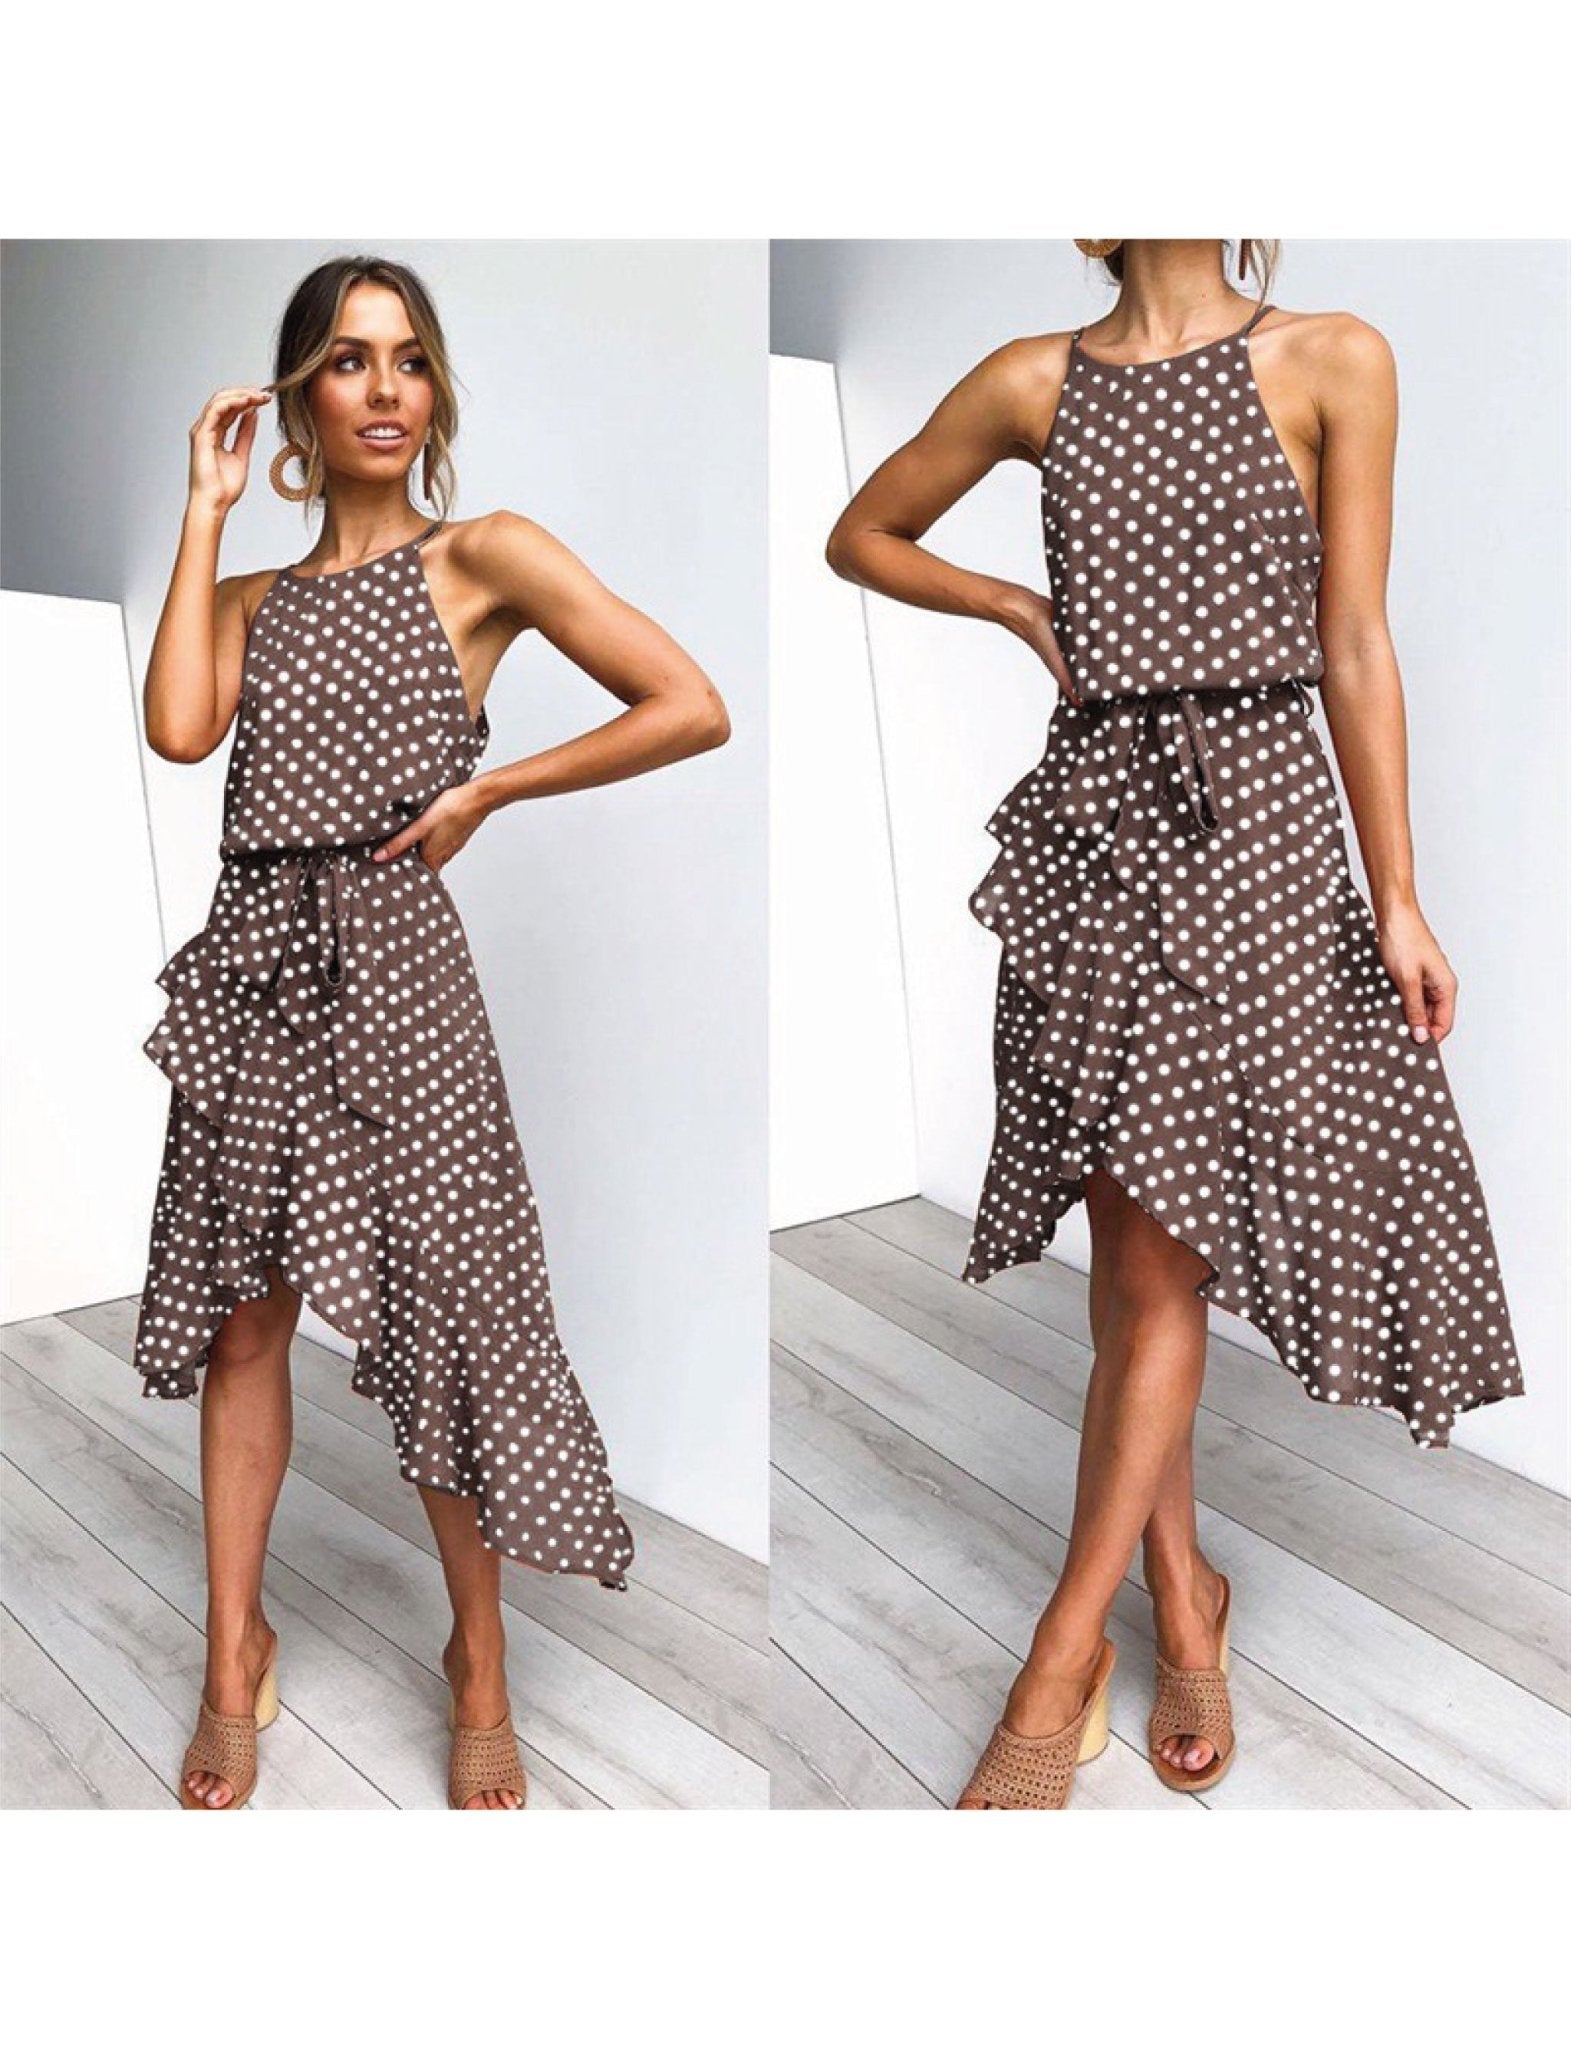 Freckled Summer Dress - DressbarnClothing